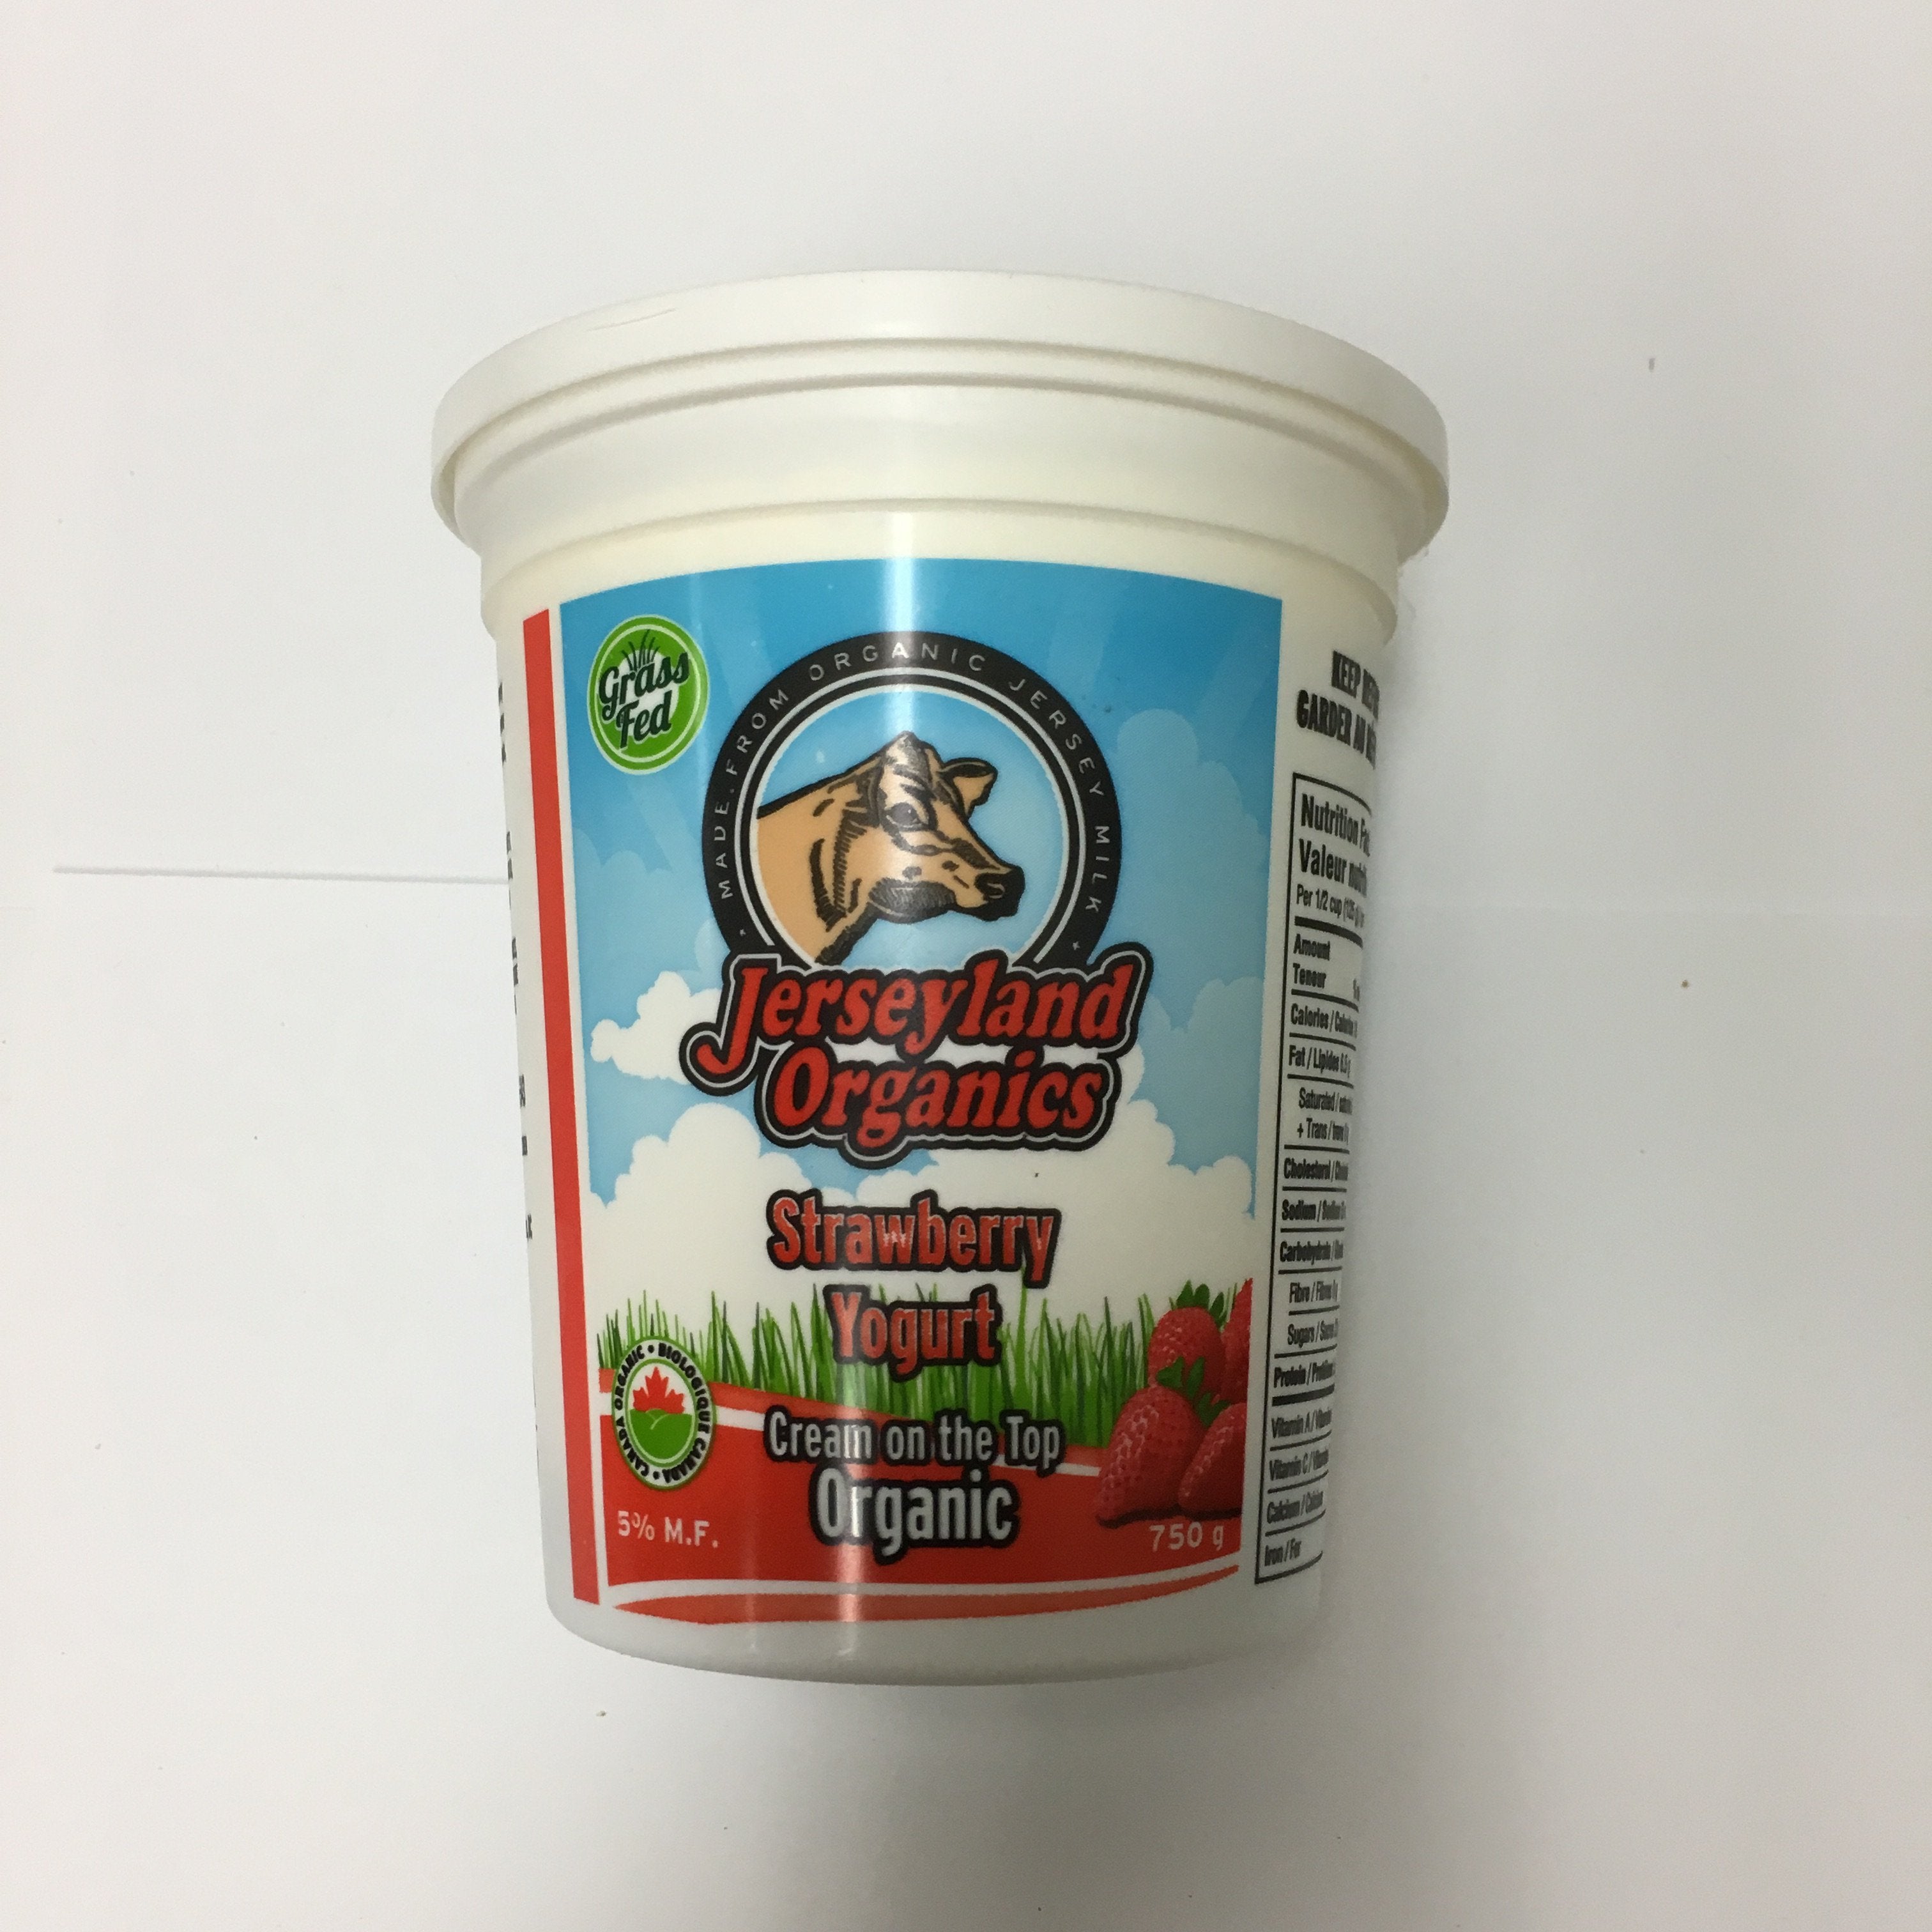 Jerseyland Organics 750g Strawberry Yogurt